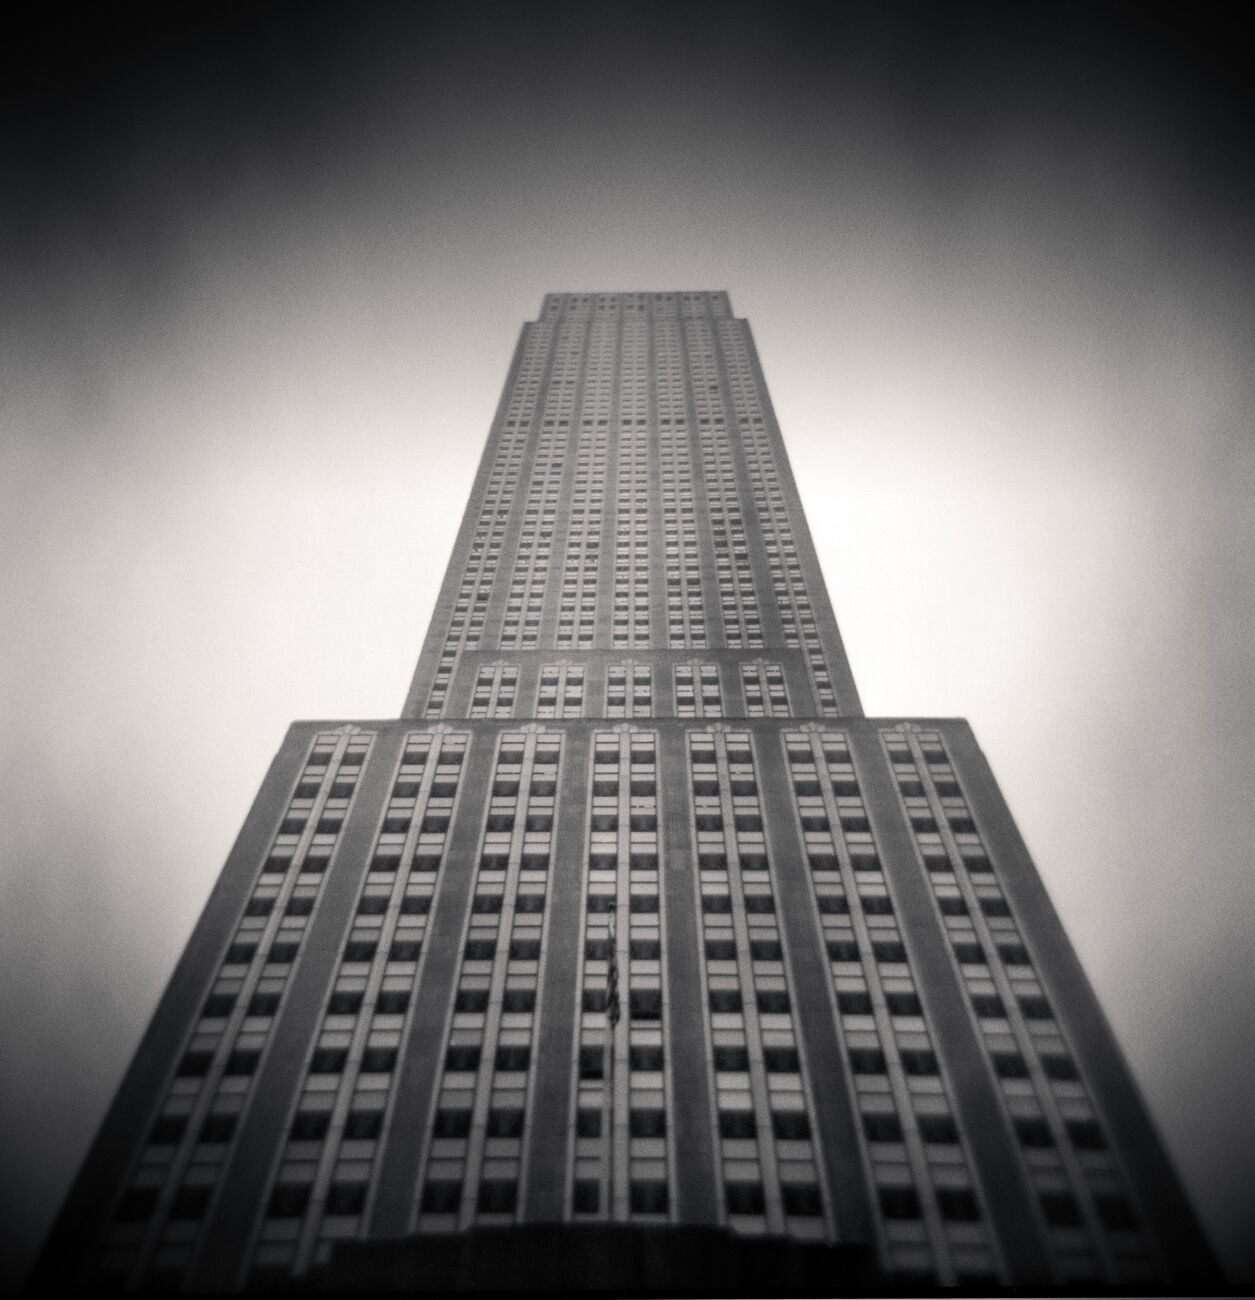 Rockefeller Center, Manhattan, New York, États-Unis. Juillet 2013. Ref-1289 - Denis Olivier Photographie